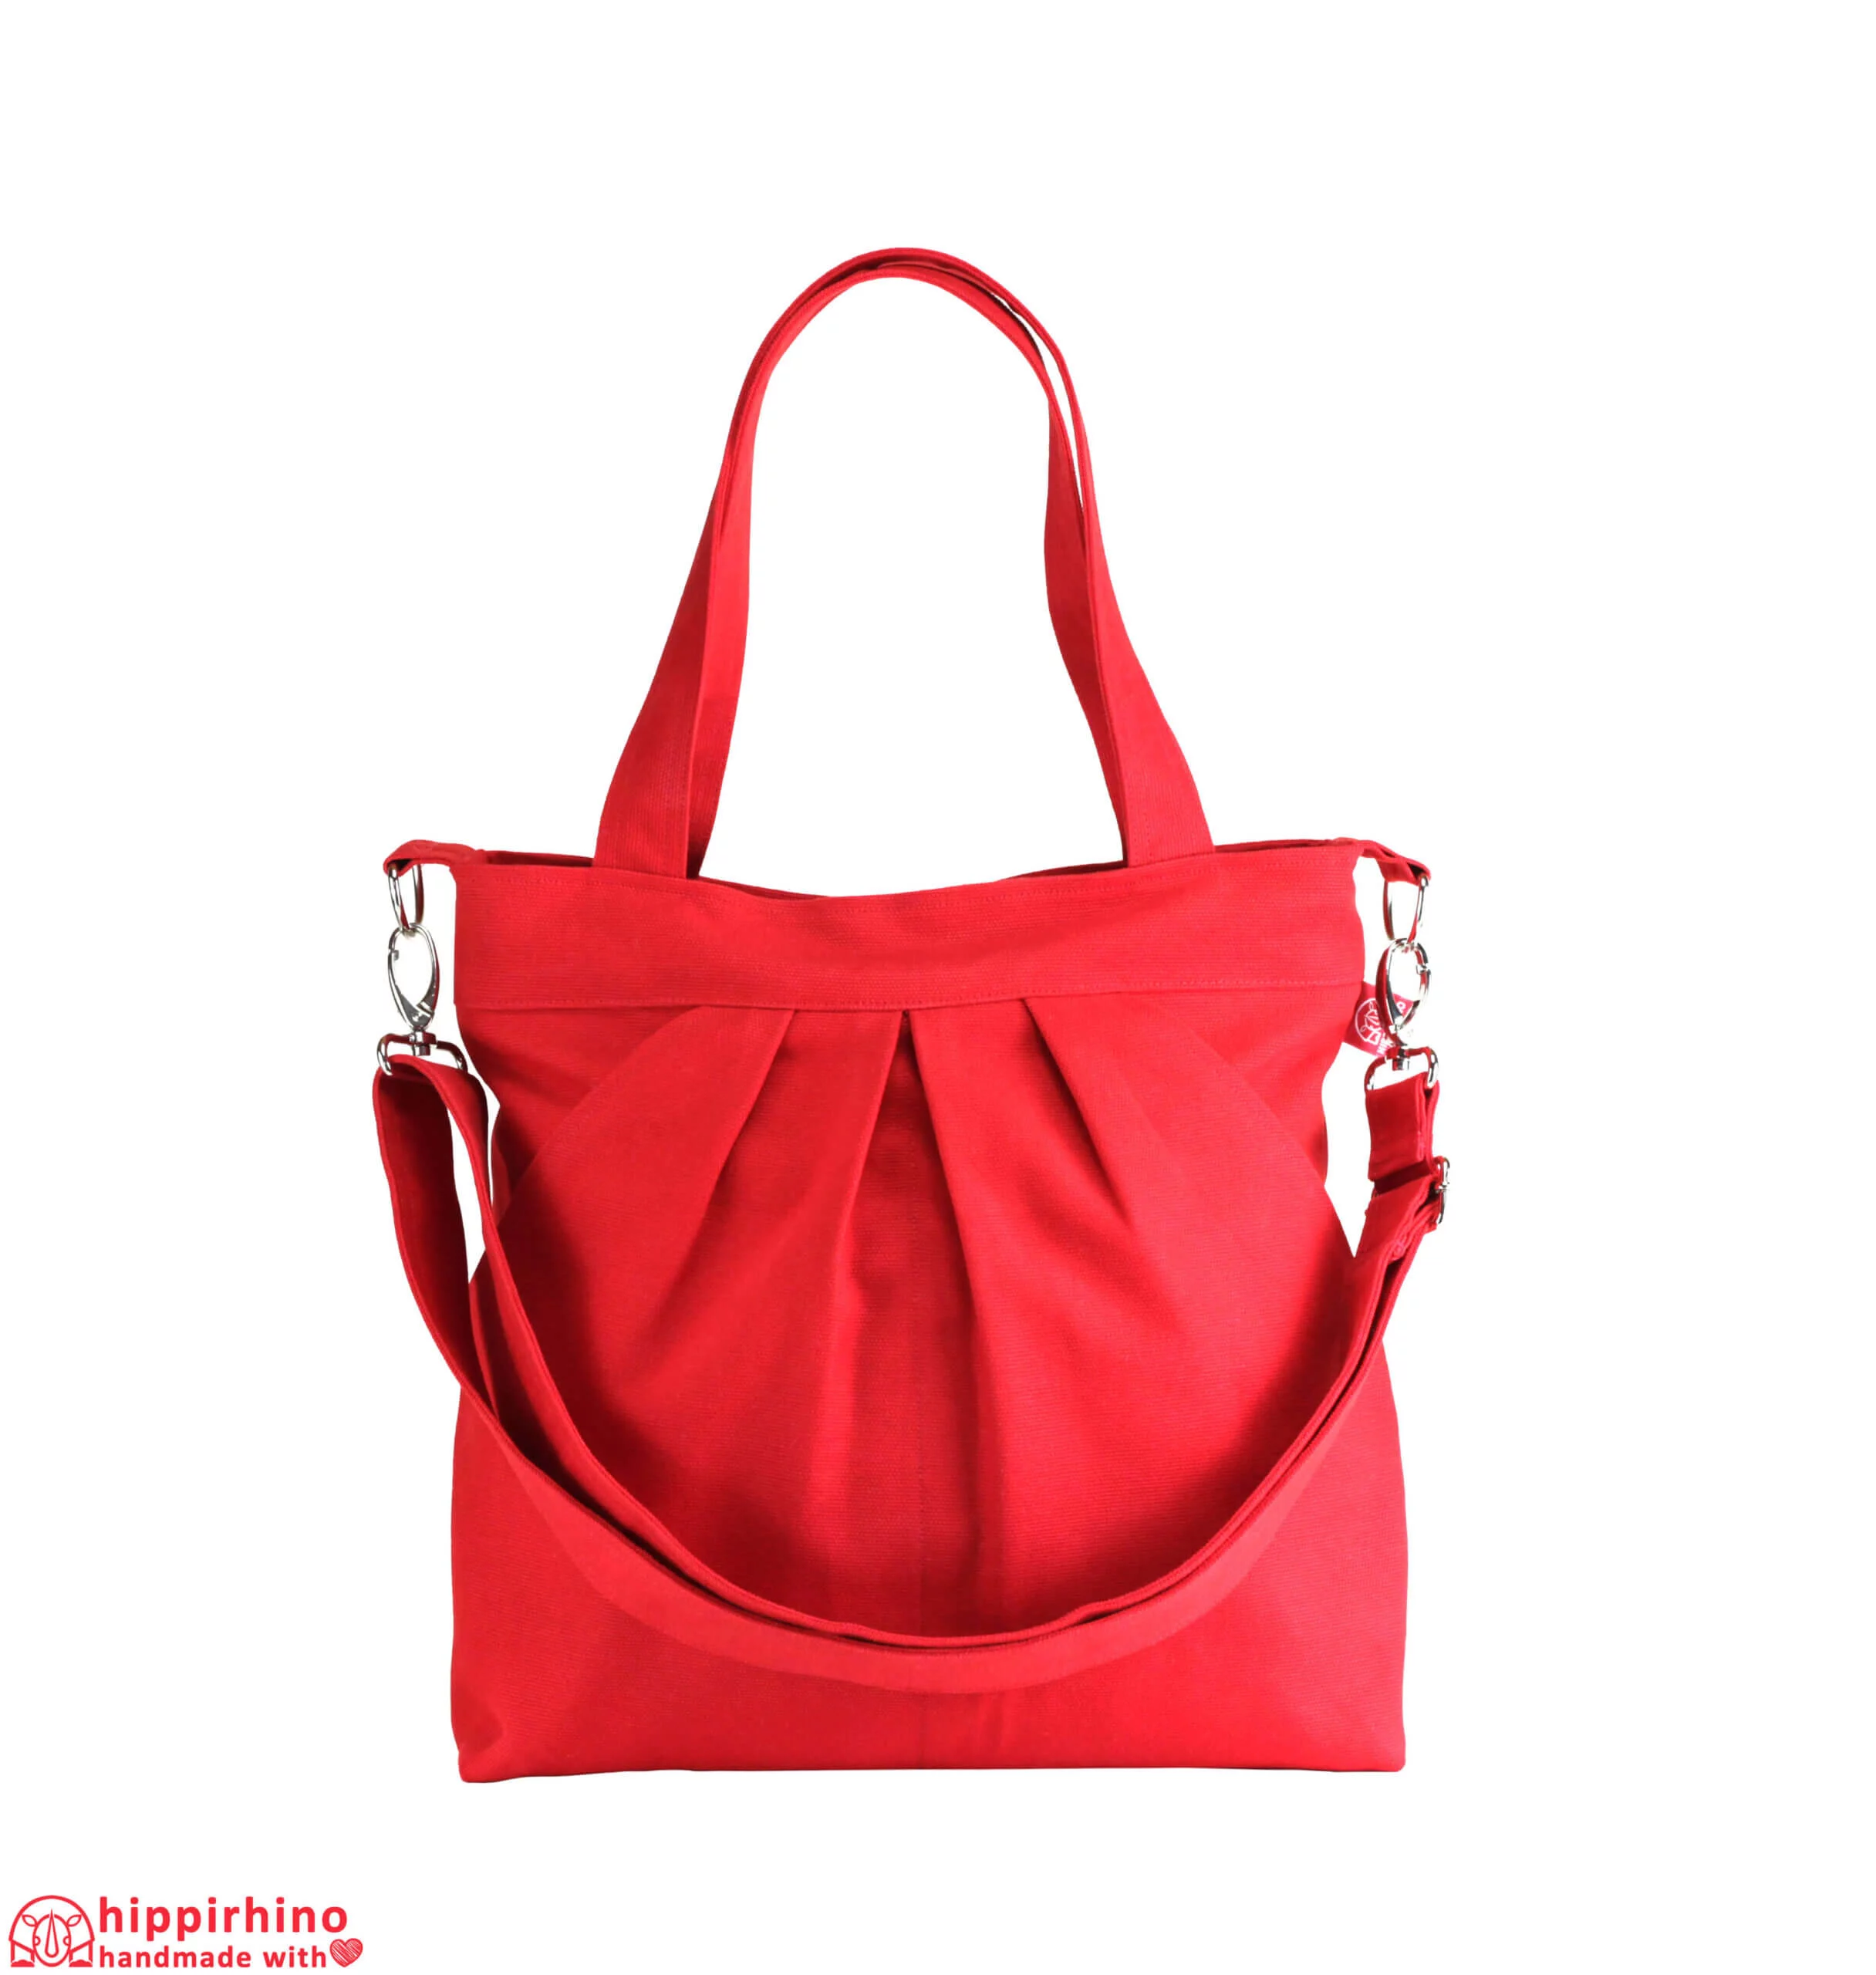 CUOIERIA FIORENTINA Red Leather Large Shoulder Handbag Purse Italy | eBay